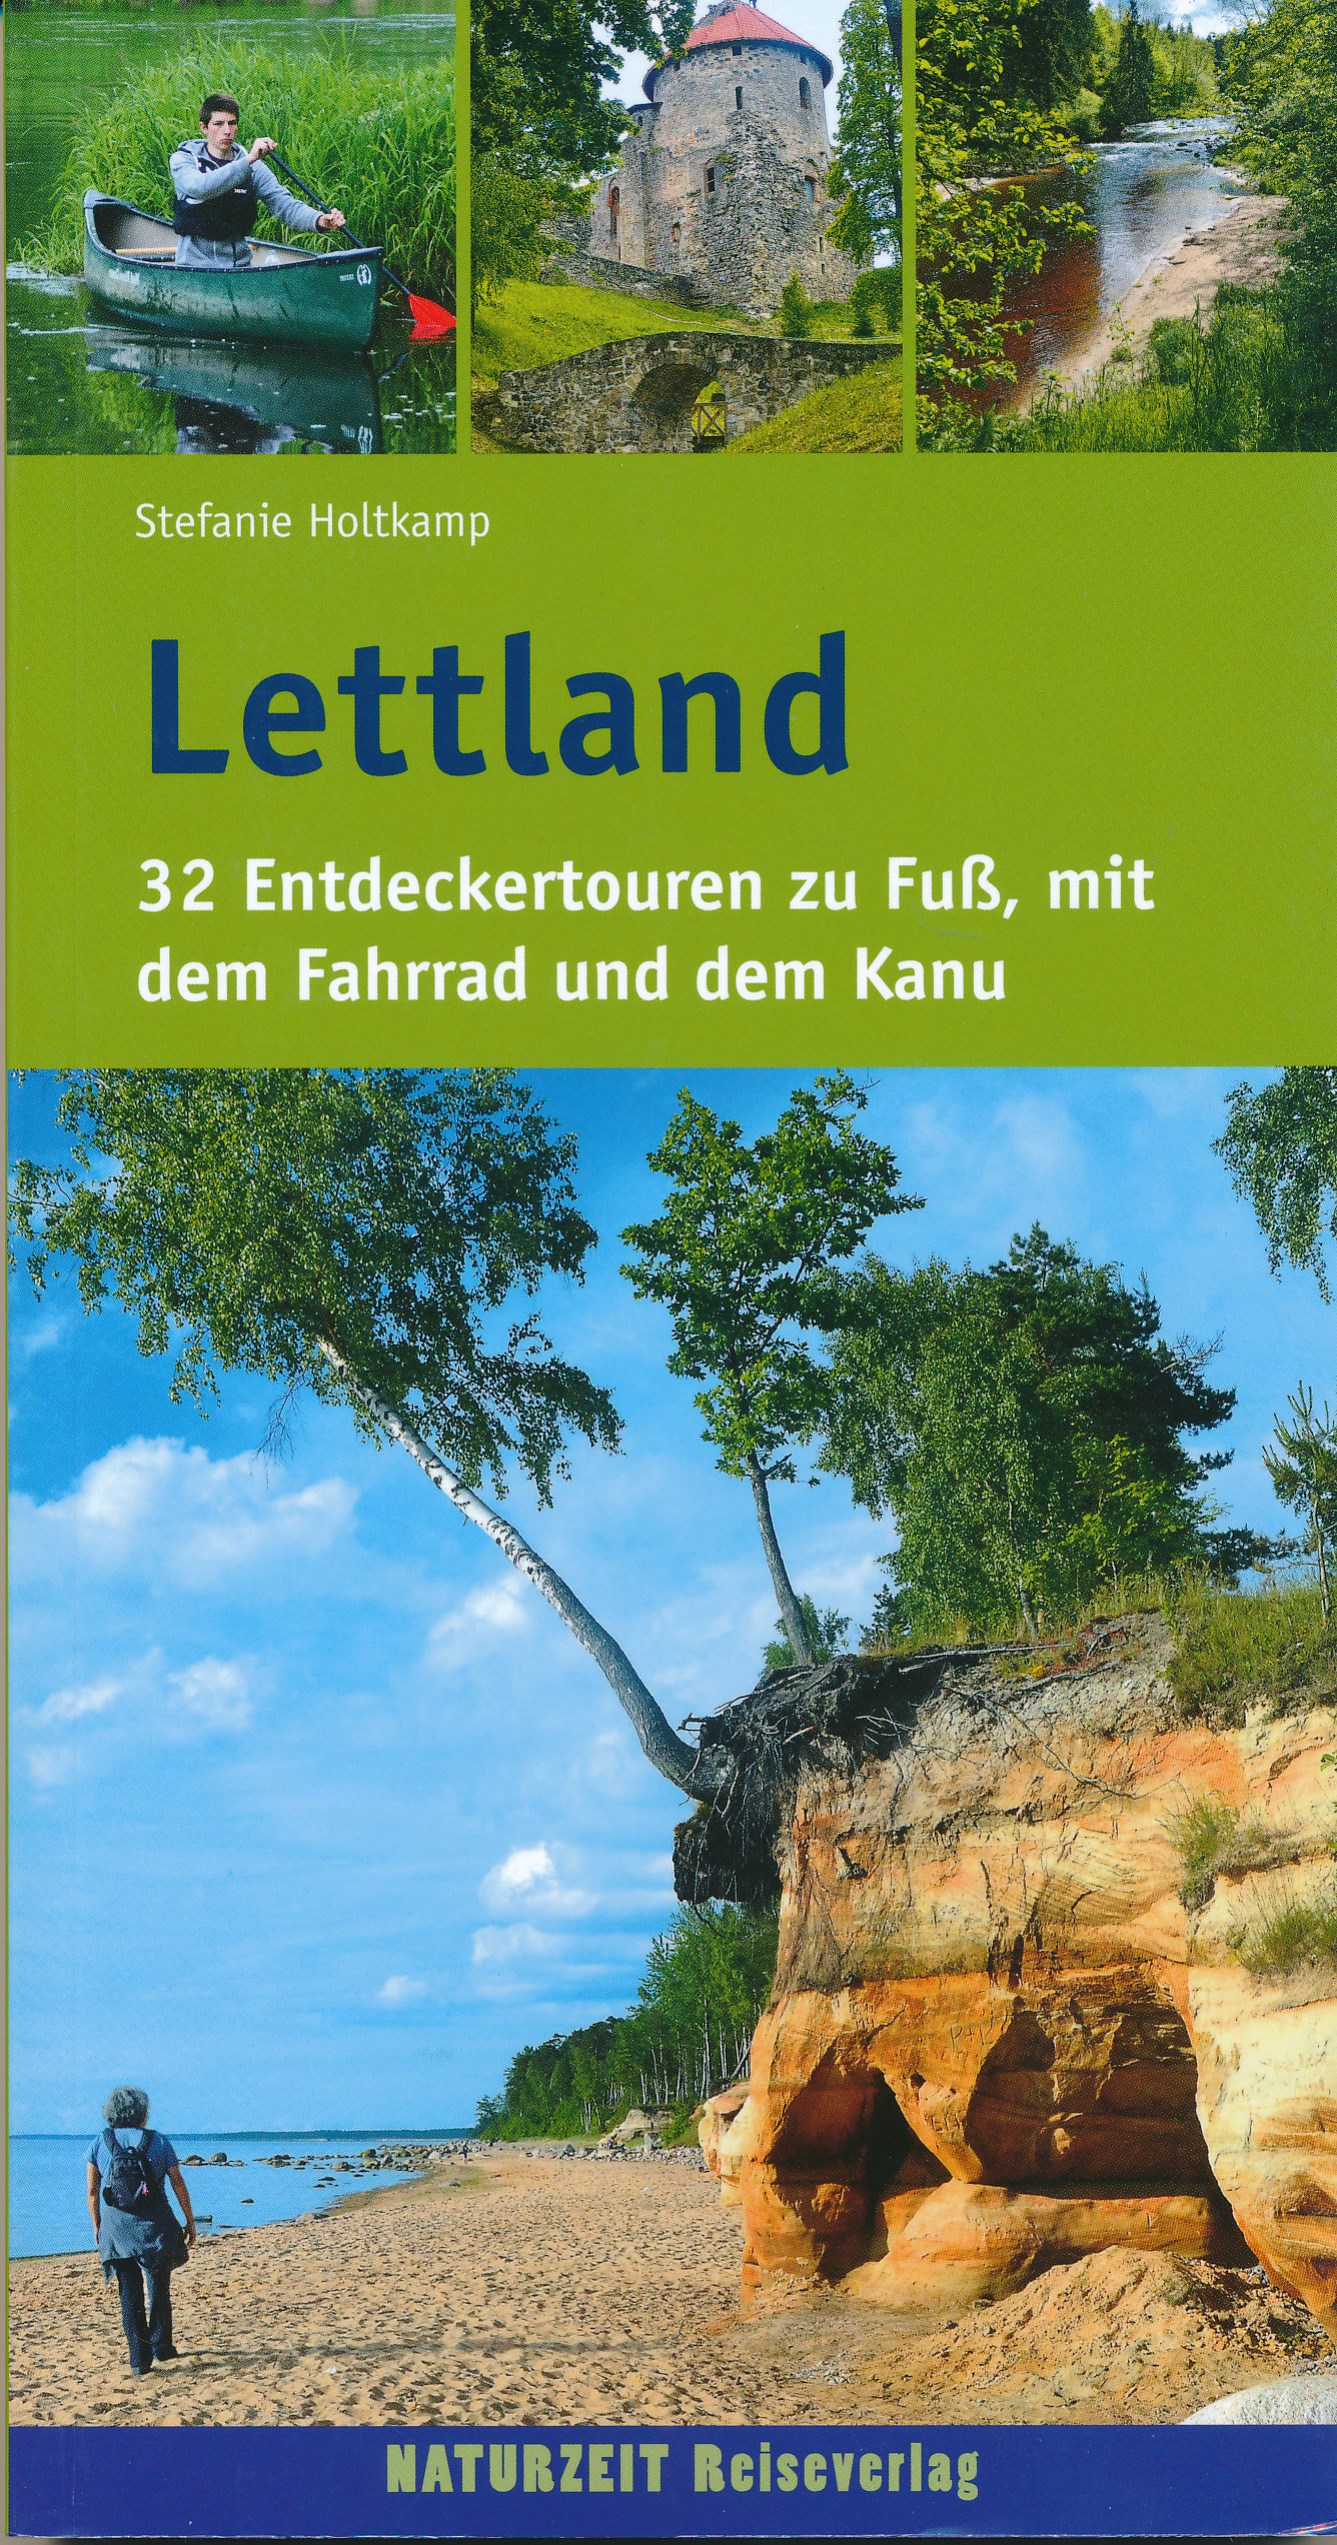 Online bestellen: Reisgids - Wandelgids Lettland - Letland | Naturzeit Reiseverlag